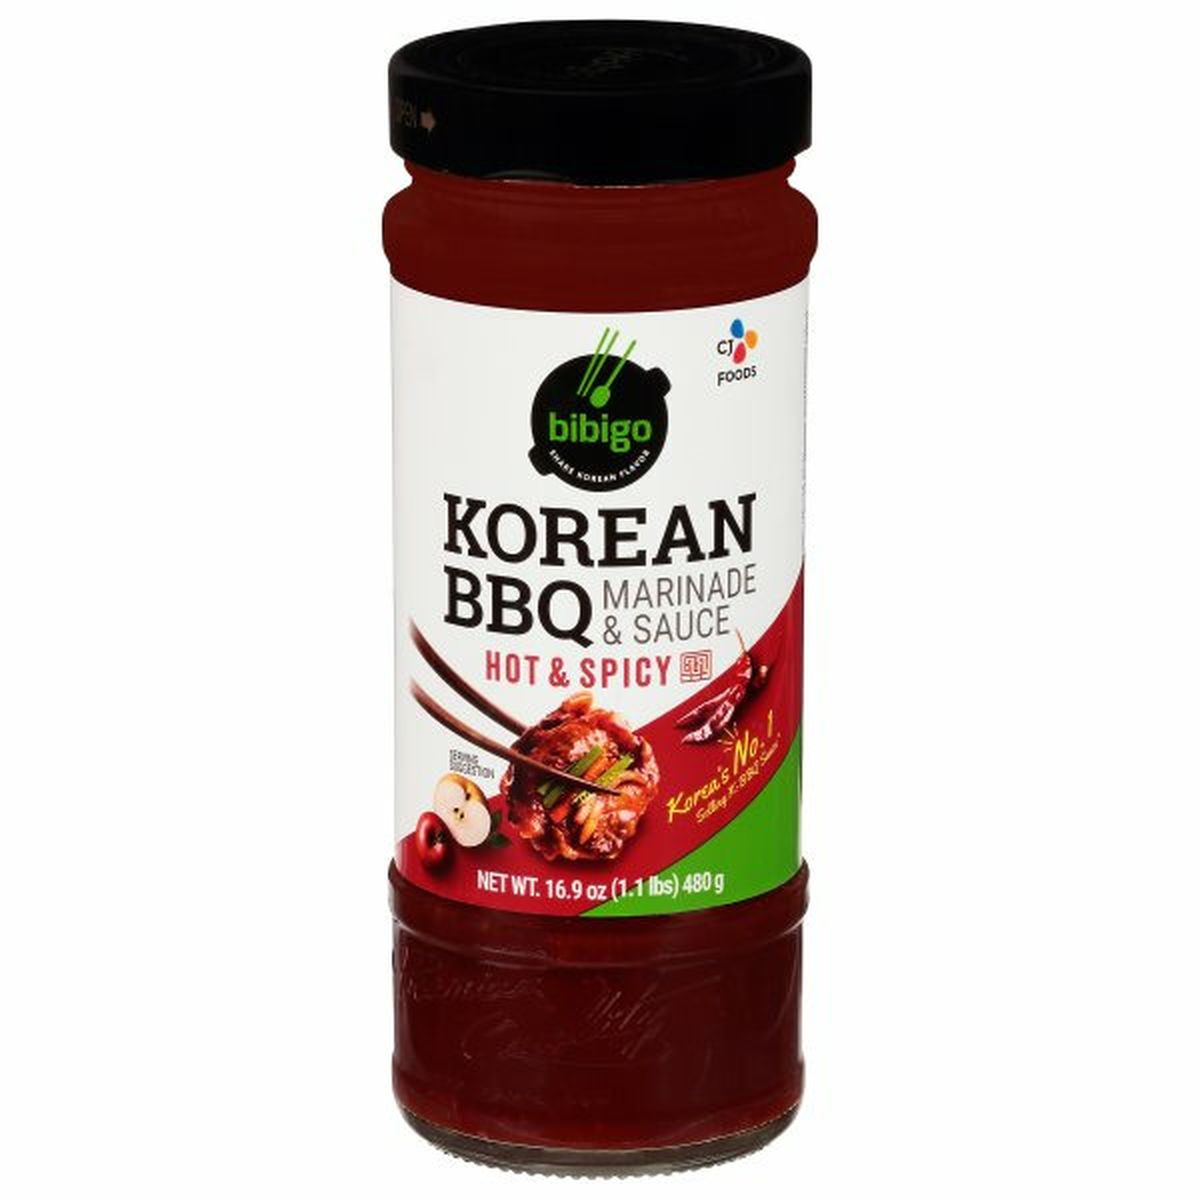 Calories in Bibigo Marinade & Sauce, Korean BBQ, Hot & Spicy